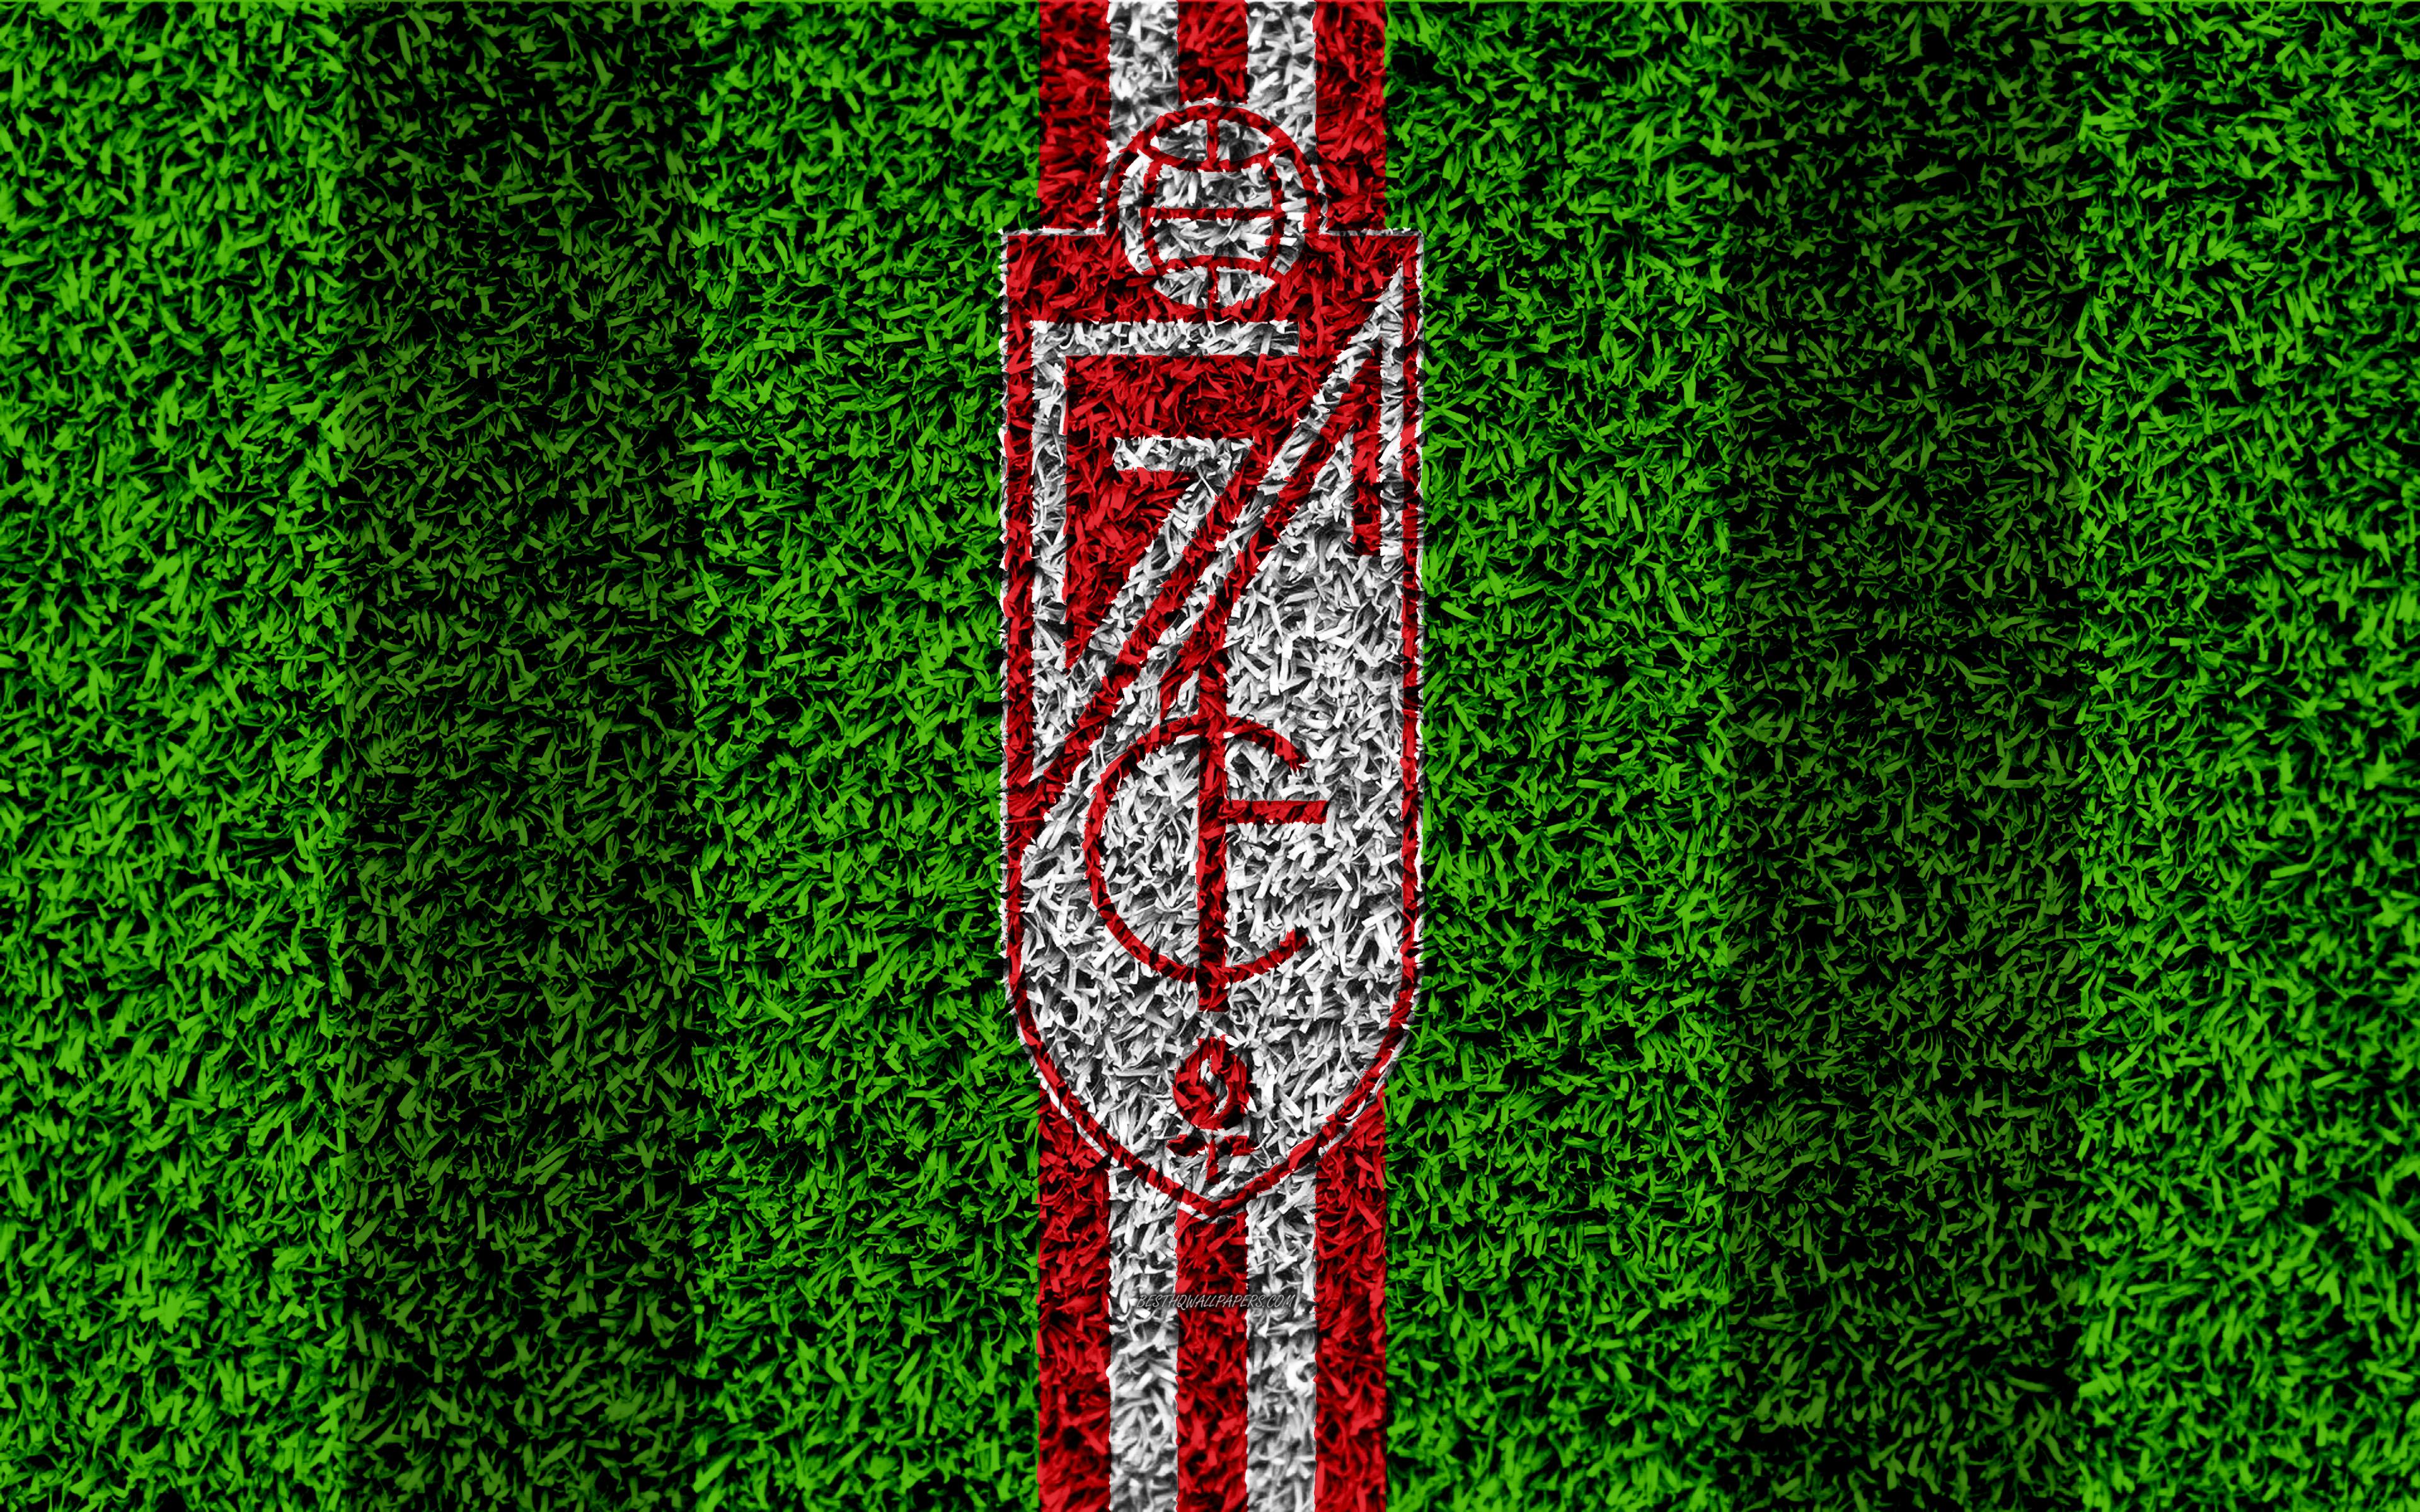 Download wallpaper Granada CF, logo, 4k, football lawn, Spanish